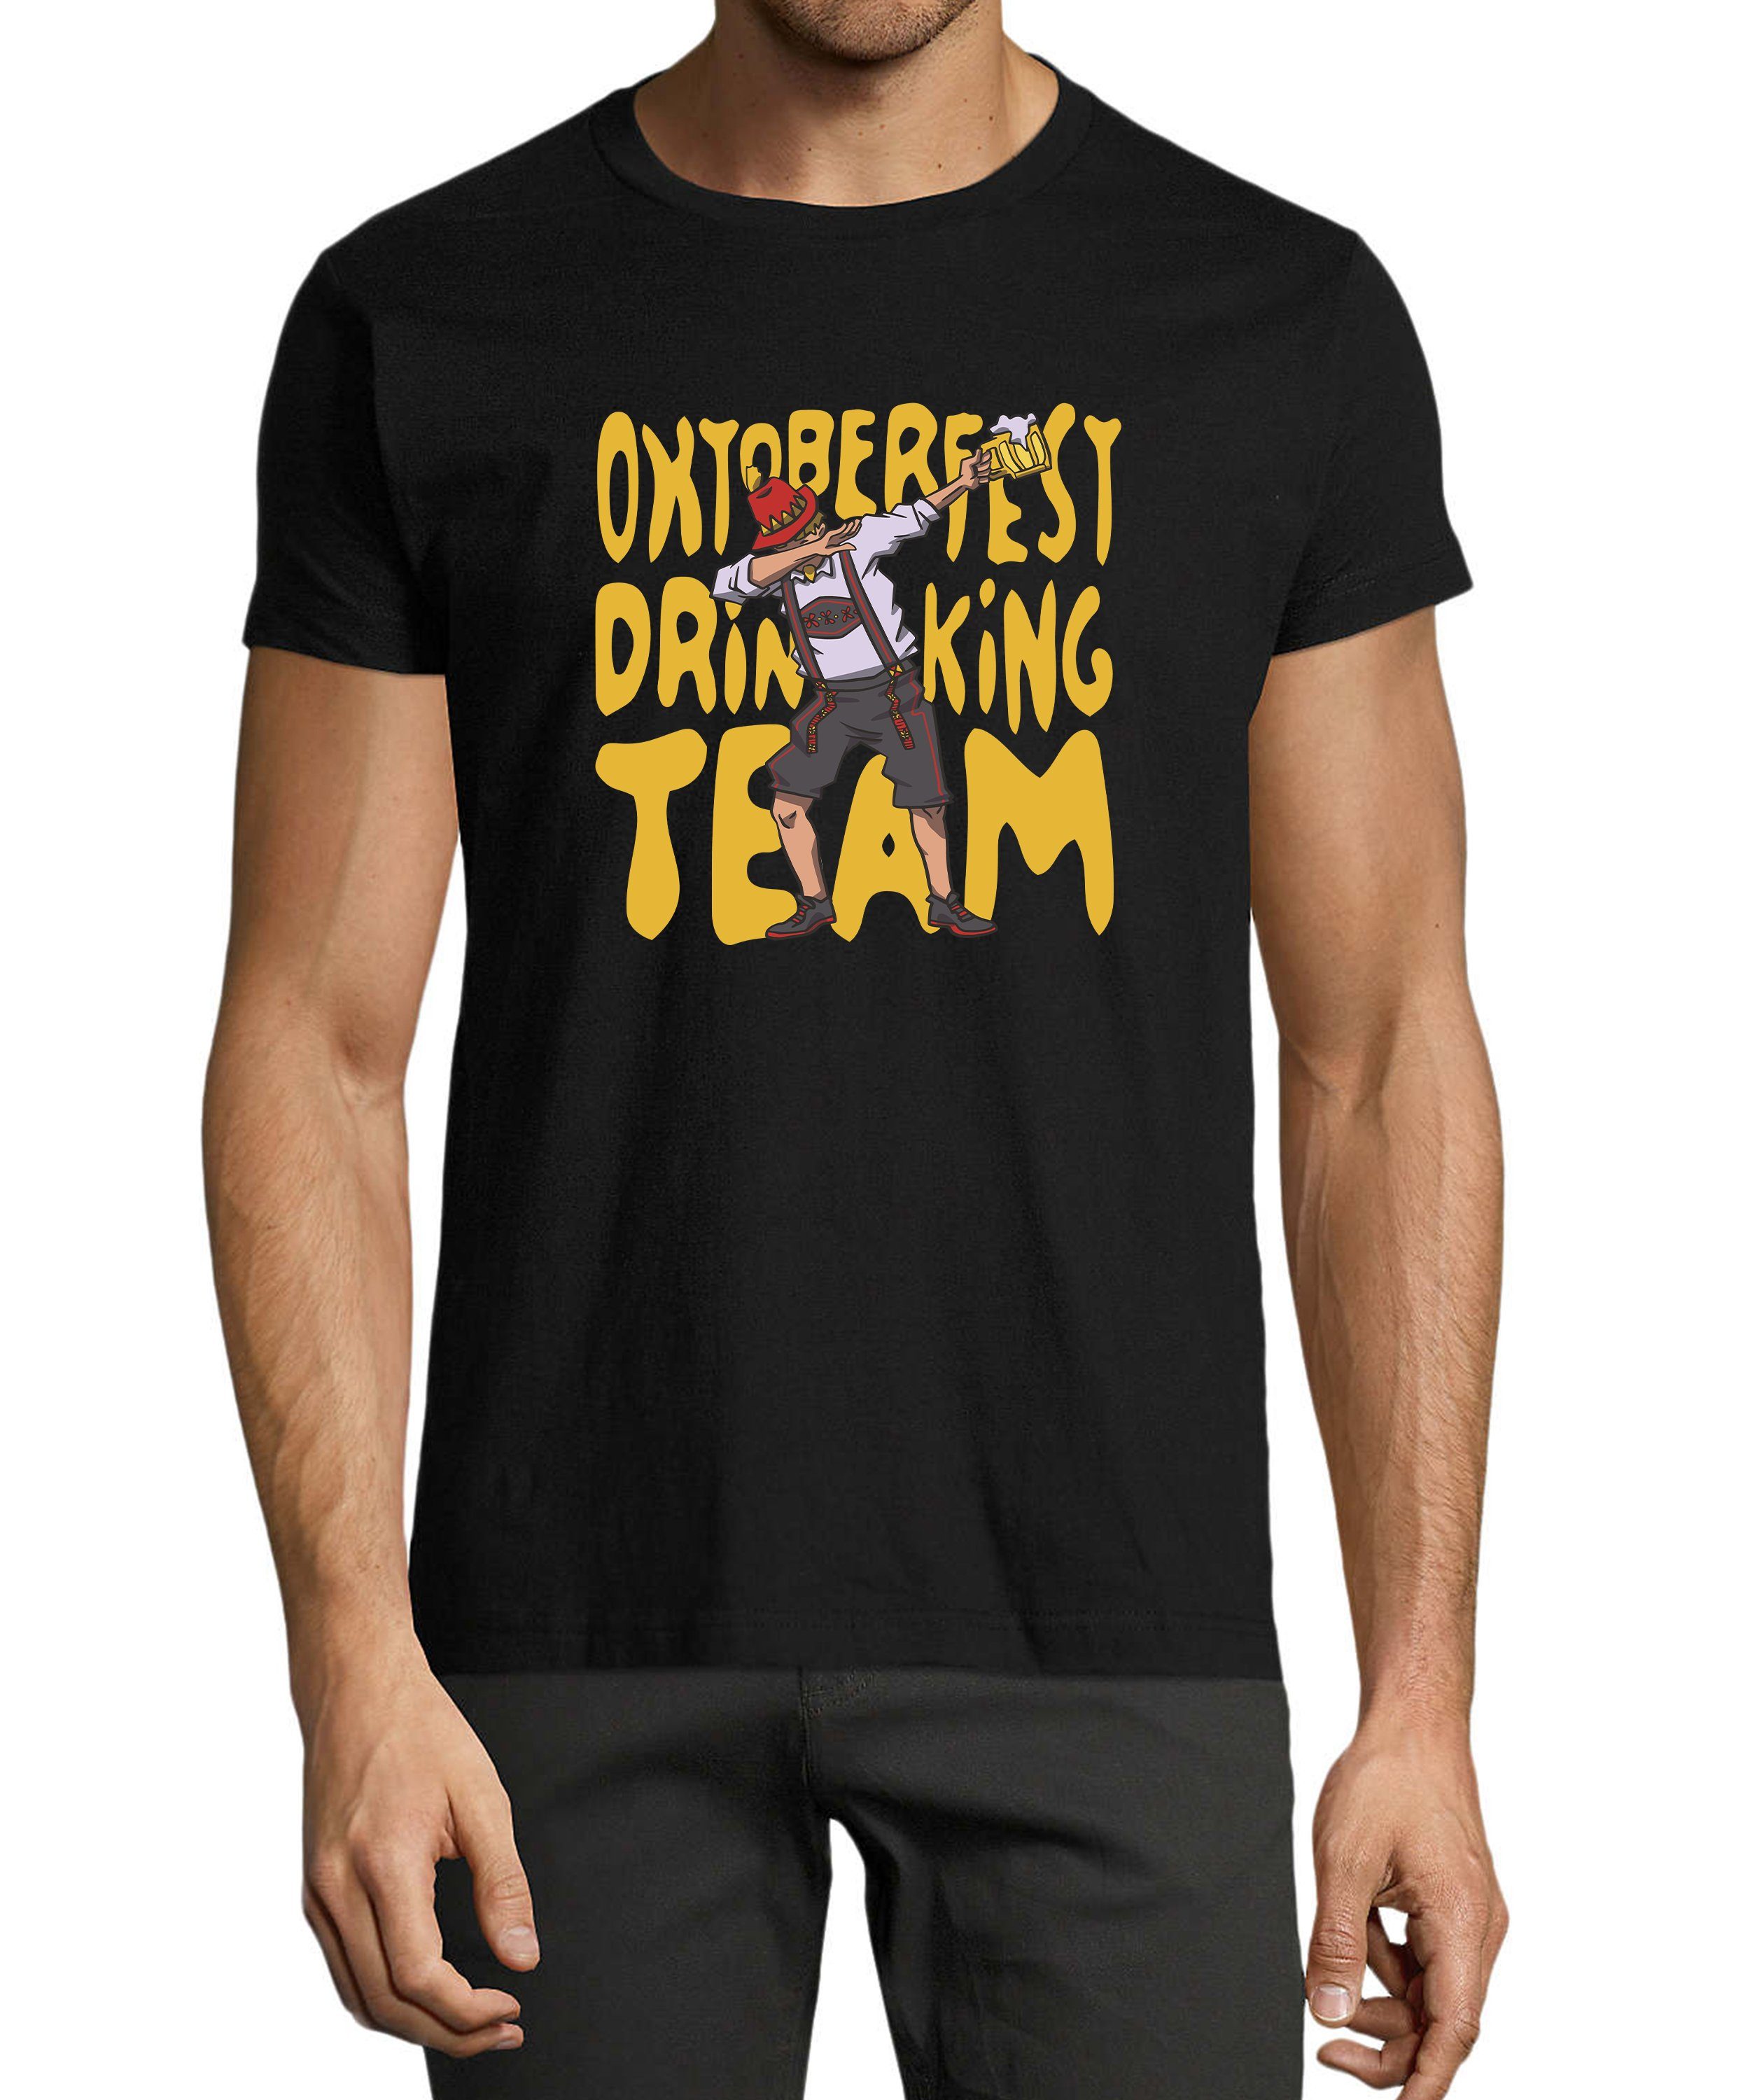 MyDesign24 T-Shirt Herren Fun Print Shirt - Oktoberfest T-Shirt Drinking Team Baumwollshirt mit Aufdruck Regular Fit, i305 schwarz